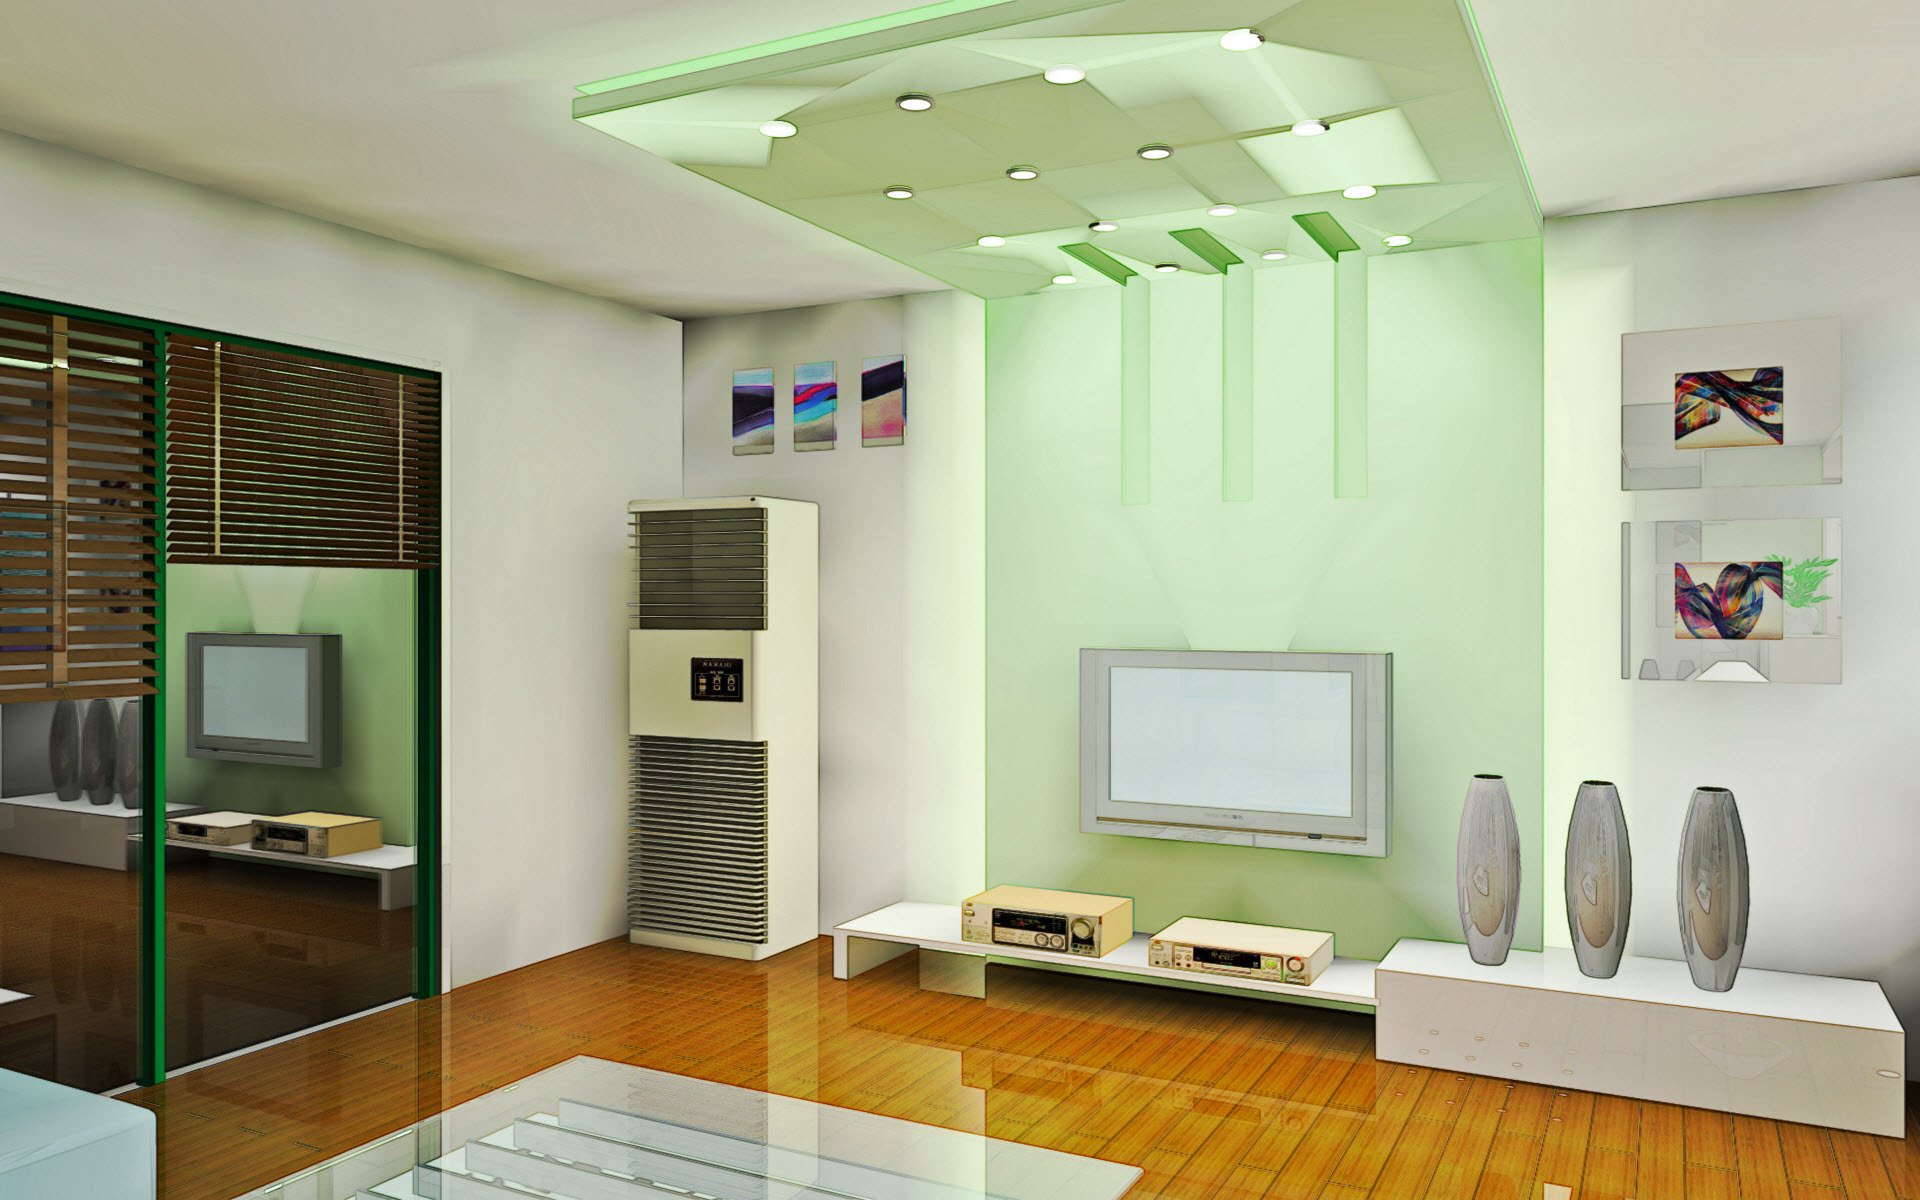 Комната в зеленом стиле бесплатно